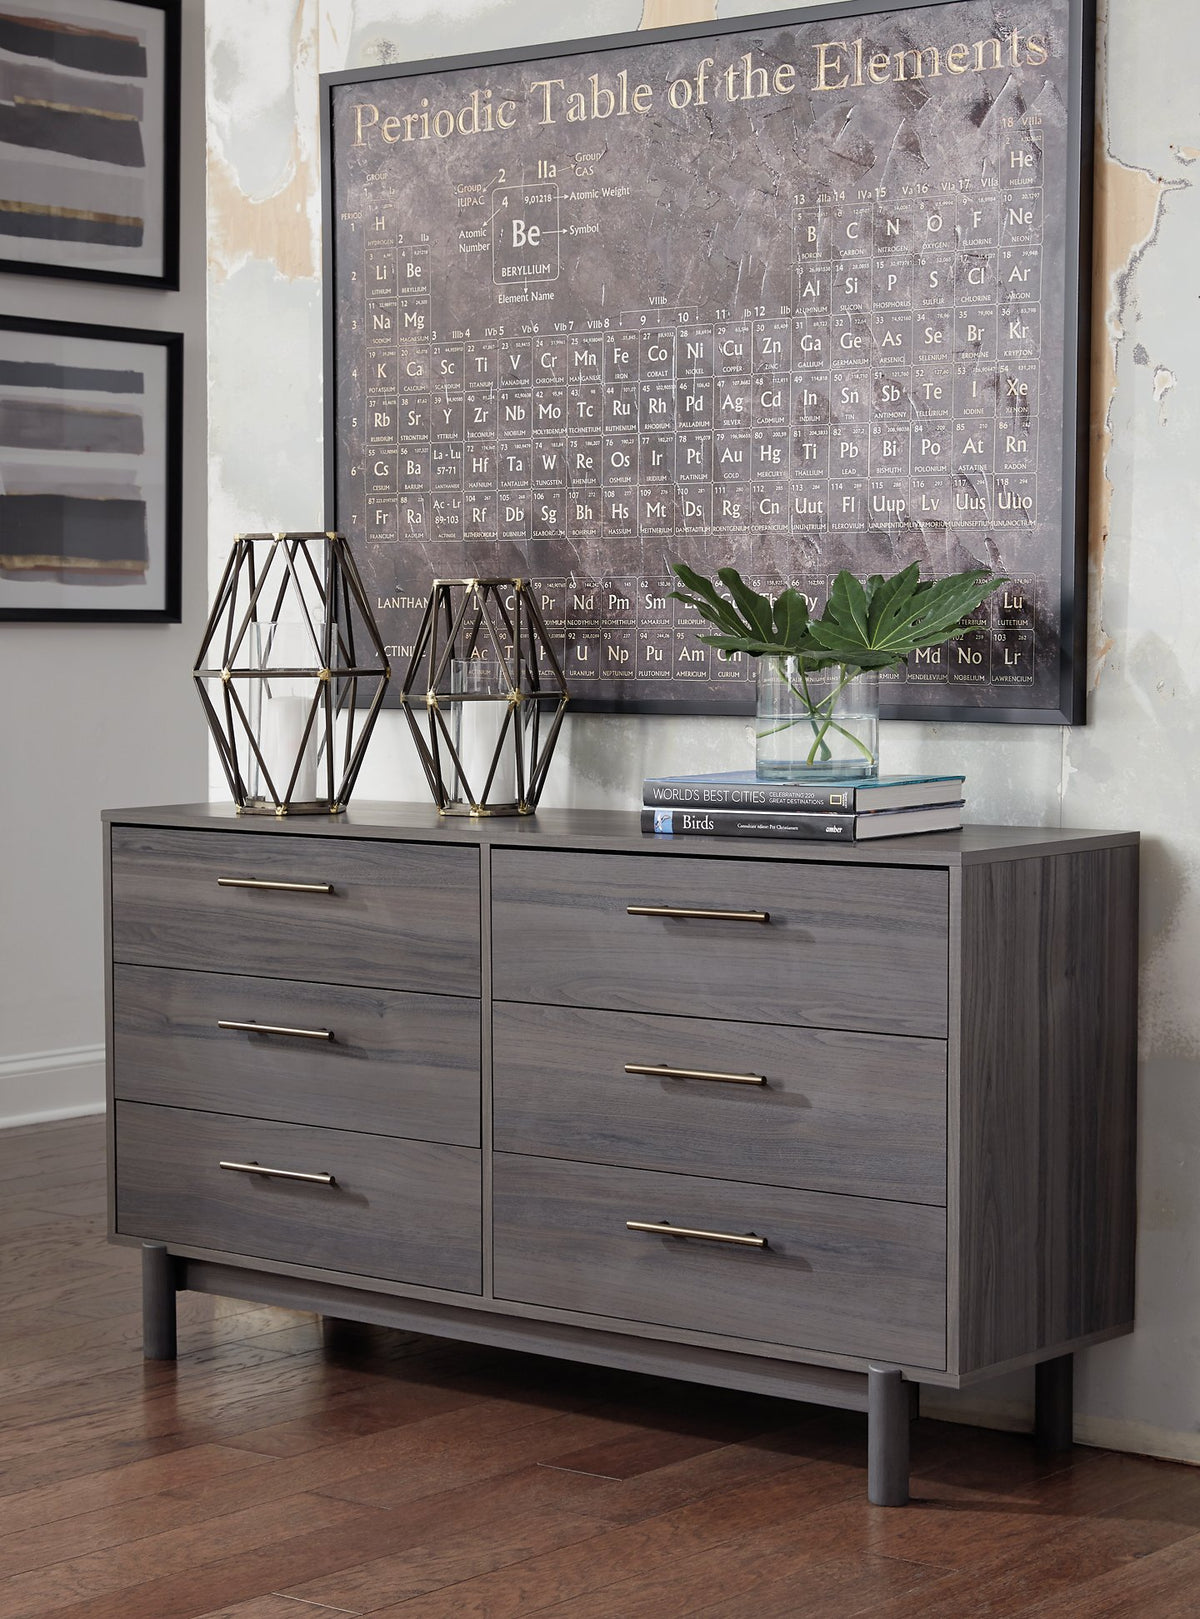 Brymont Dresser - Half Price Furniture